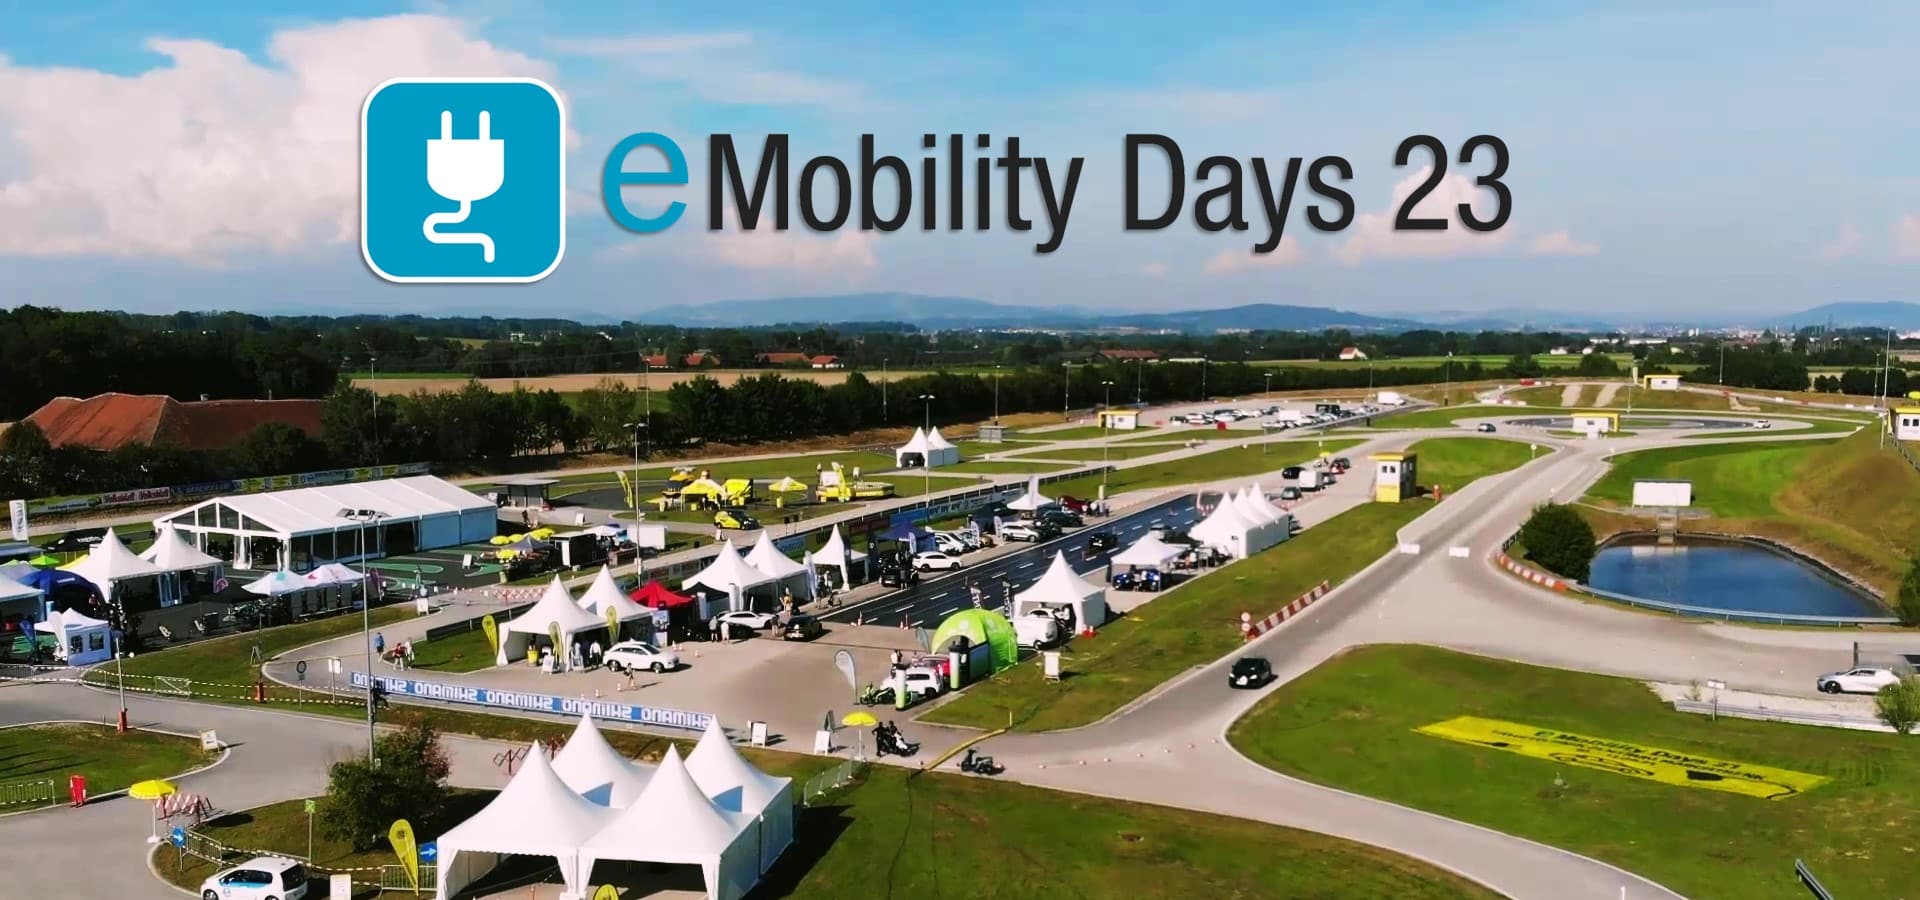 ÖAMTC eMobility Days 23 | emobilityDays23 FT Header 1920x900 1